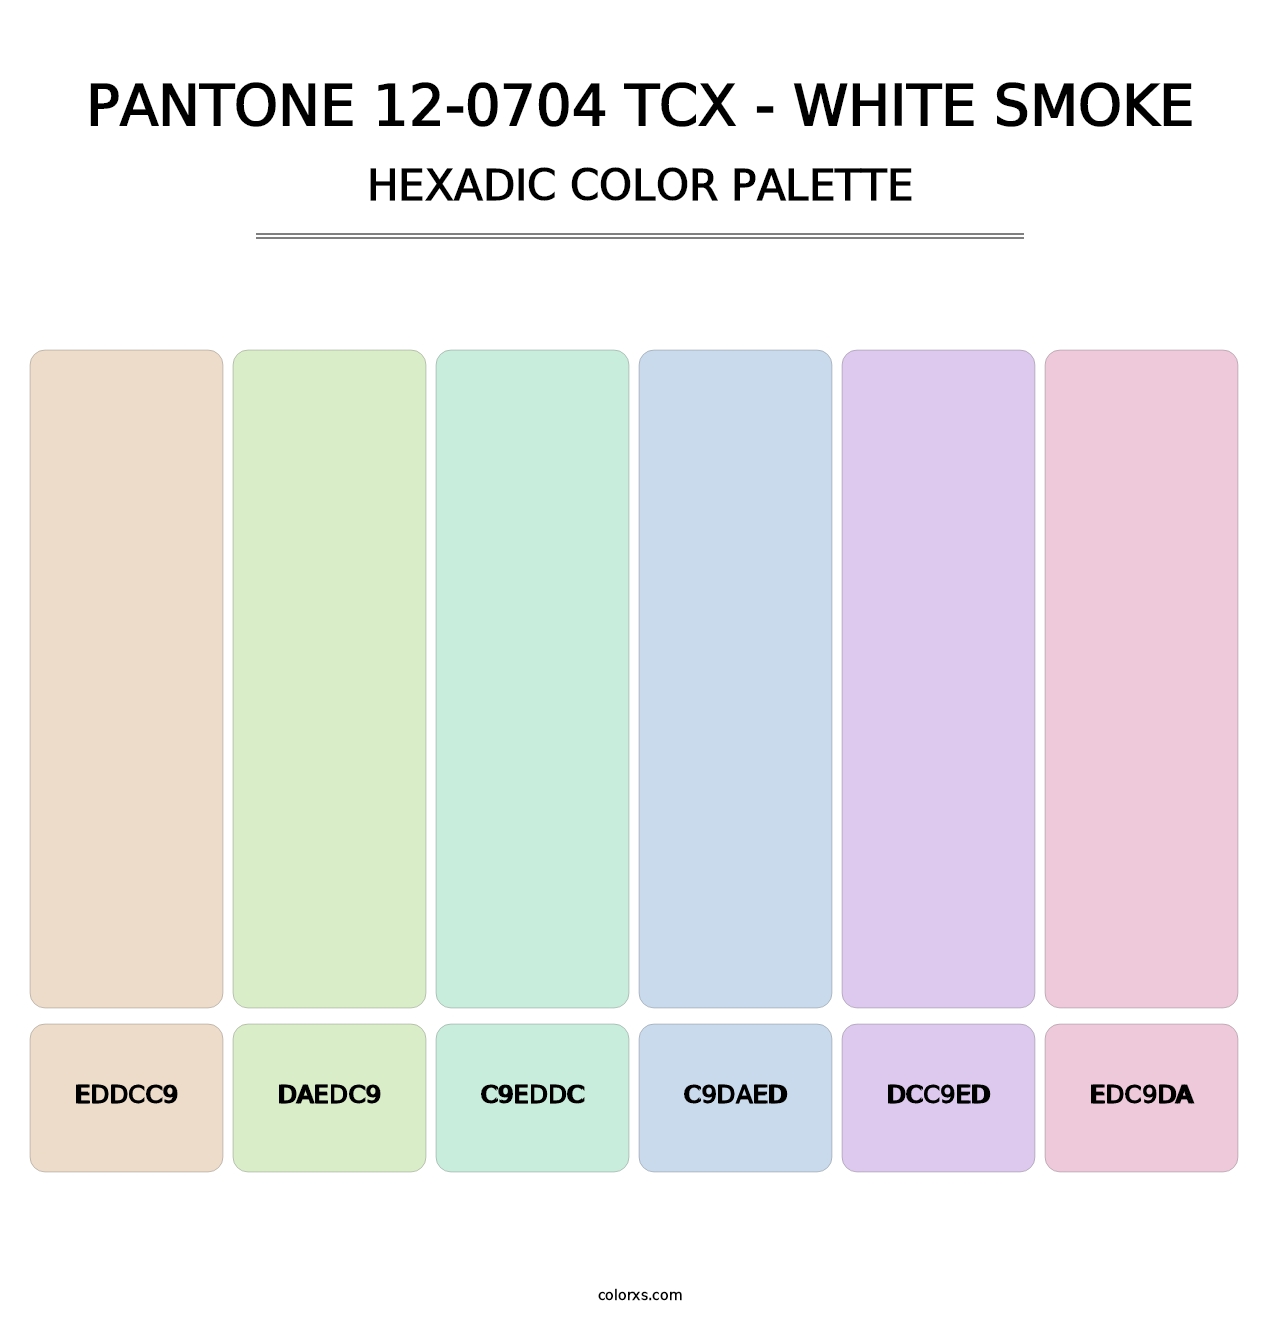 PANTONE 12-0704 TCX - White Smoke - Hexadic Color Palette